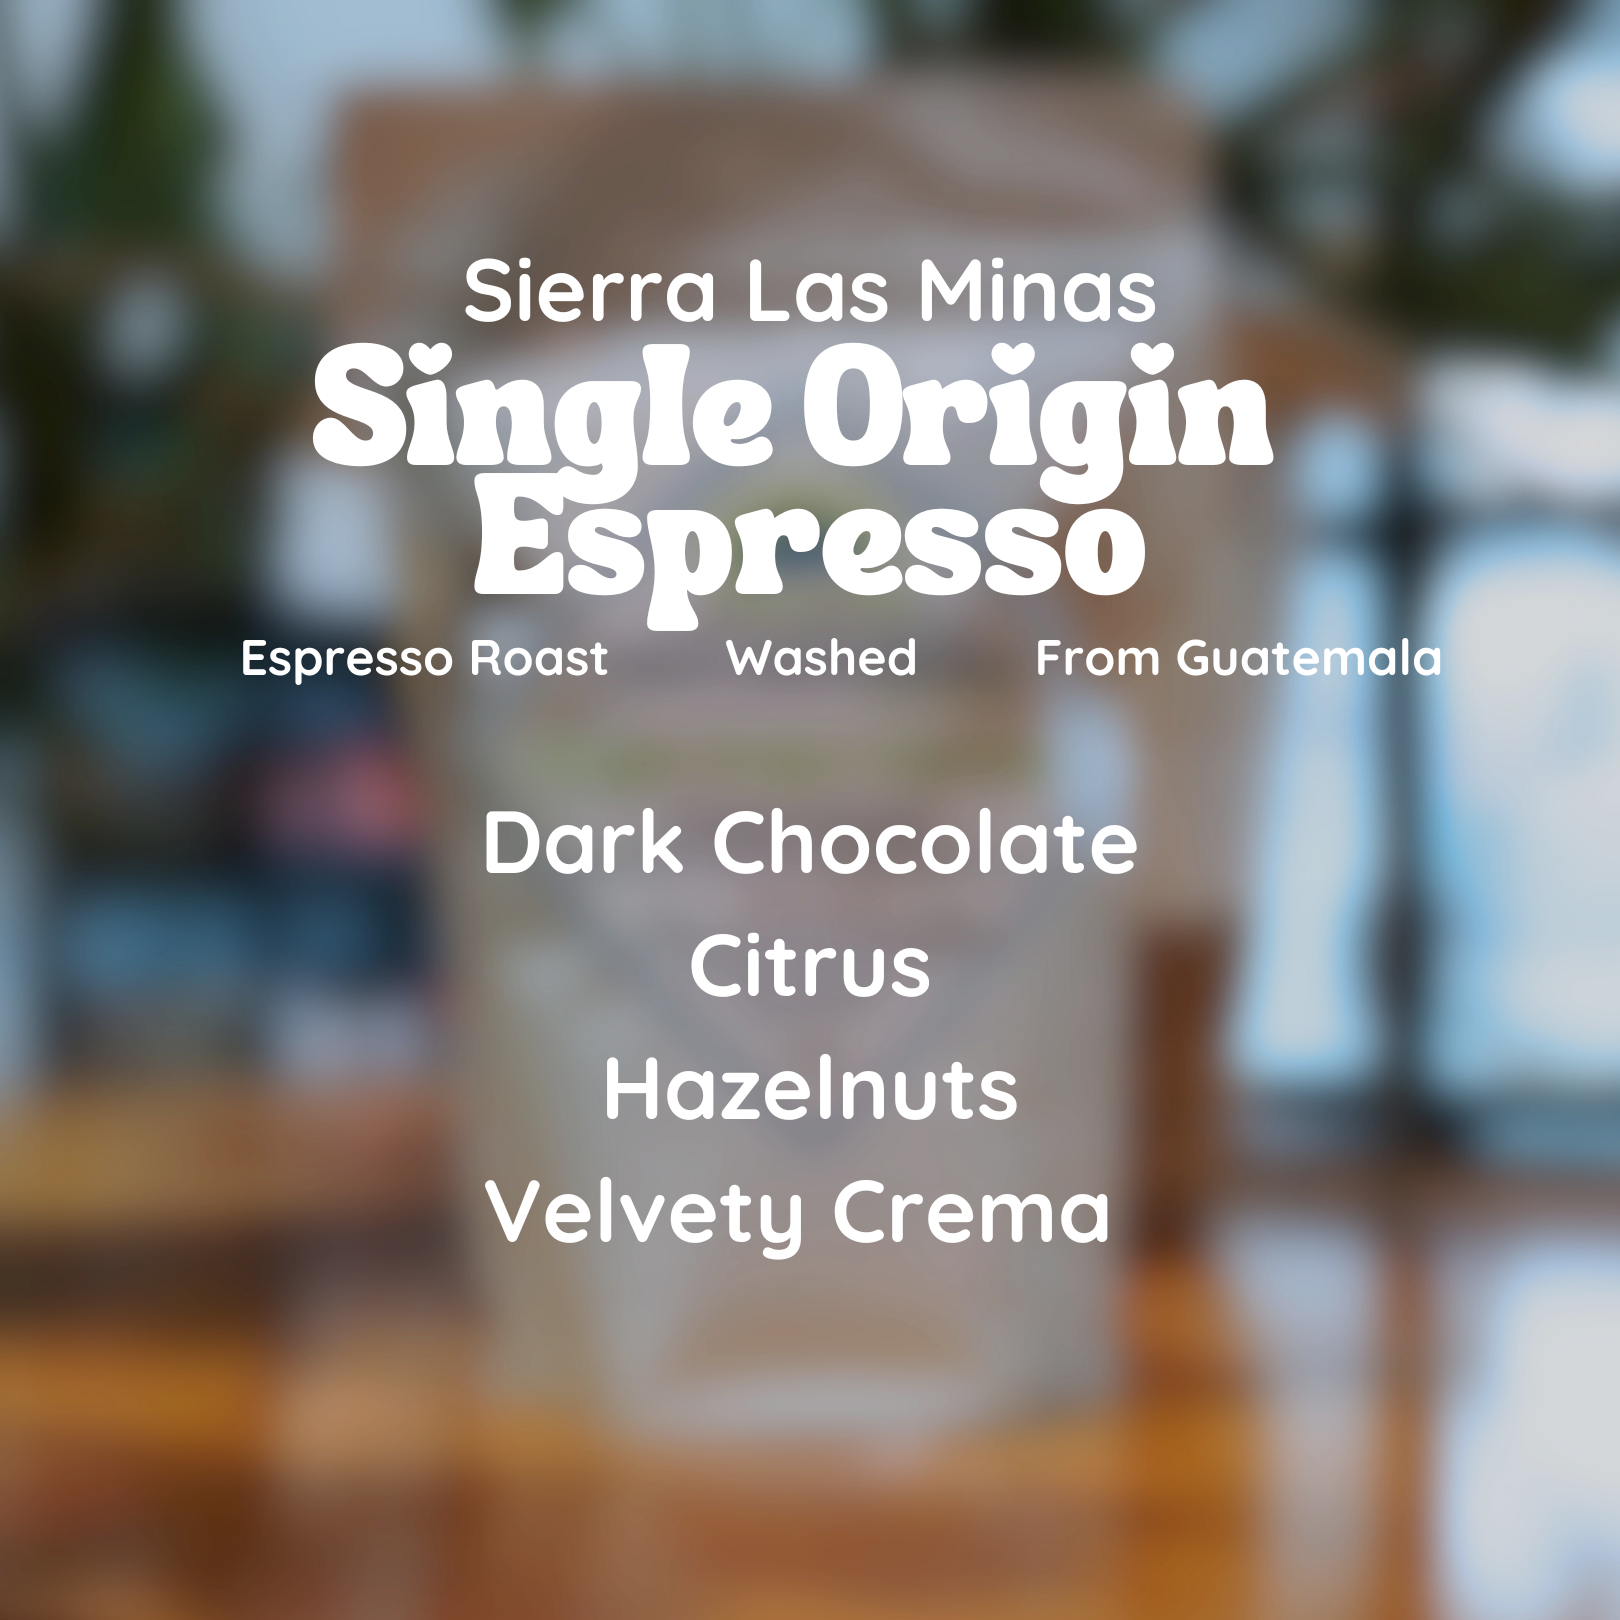 Sierra Las Minas Single Origin Espresso Coffee Beans